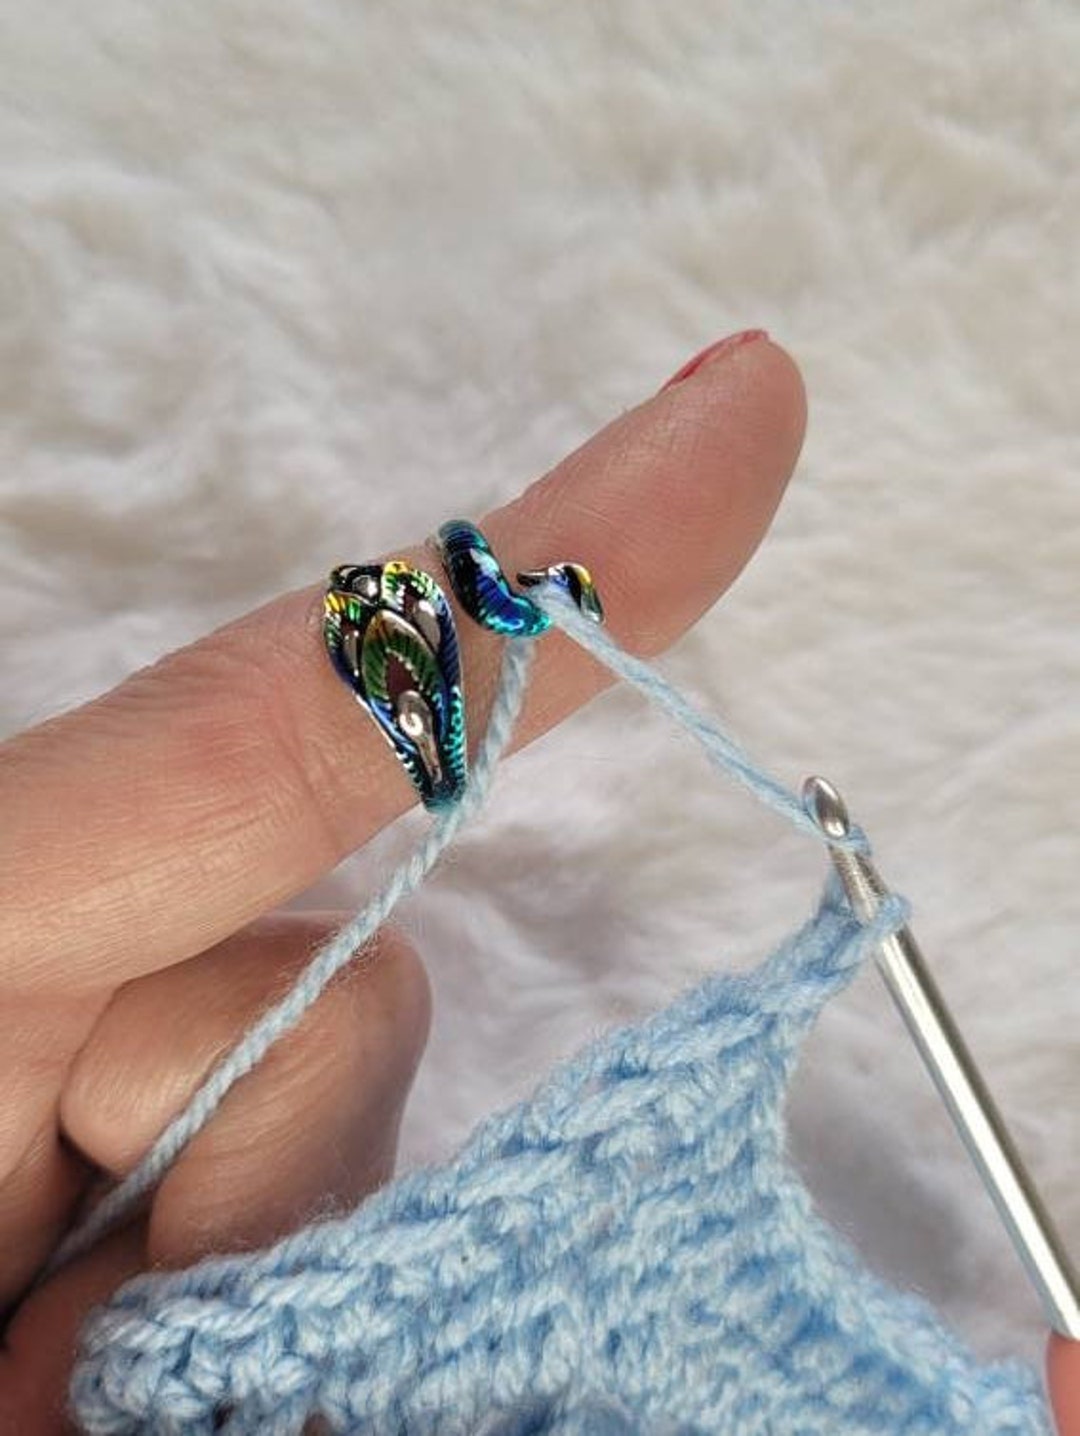 16Pcs Sewing Knitting Rings Decorative Finger Rings Crochet Knitting Rings